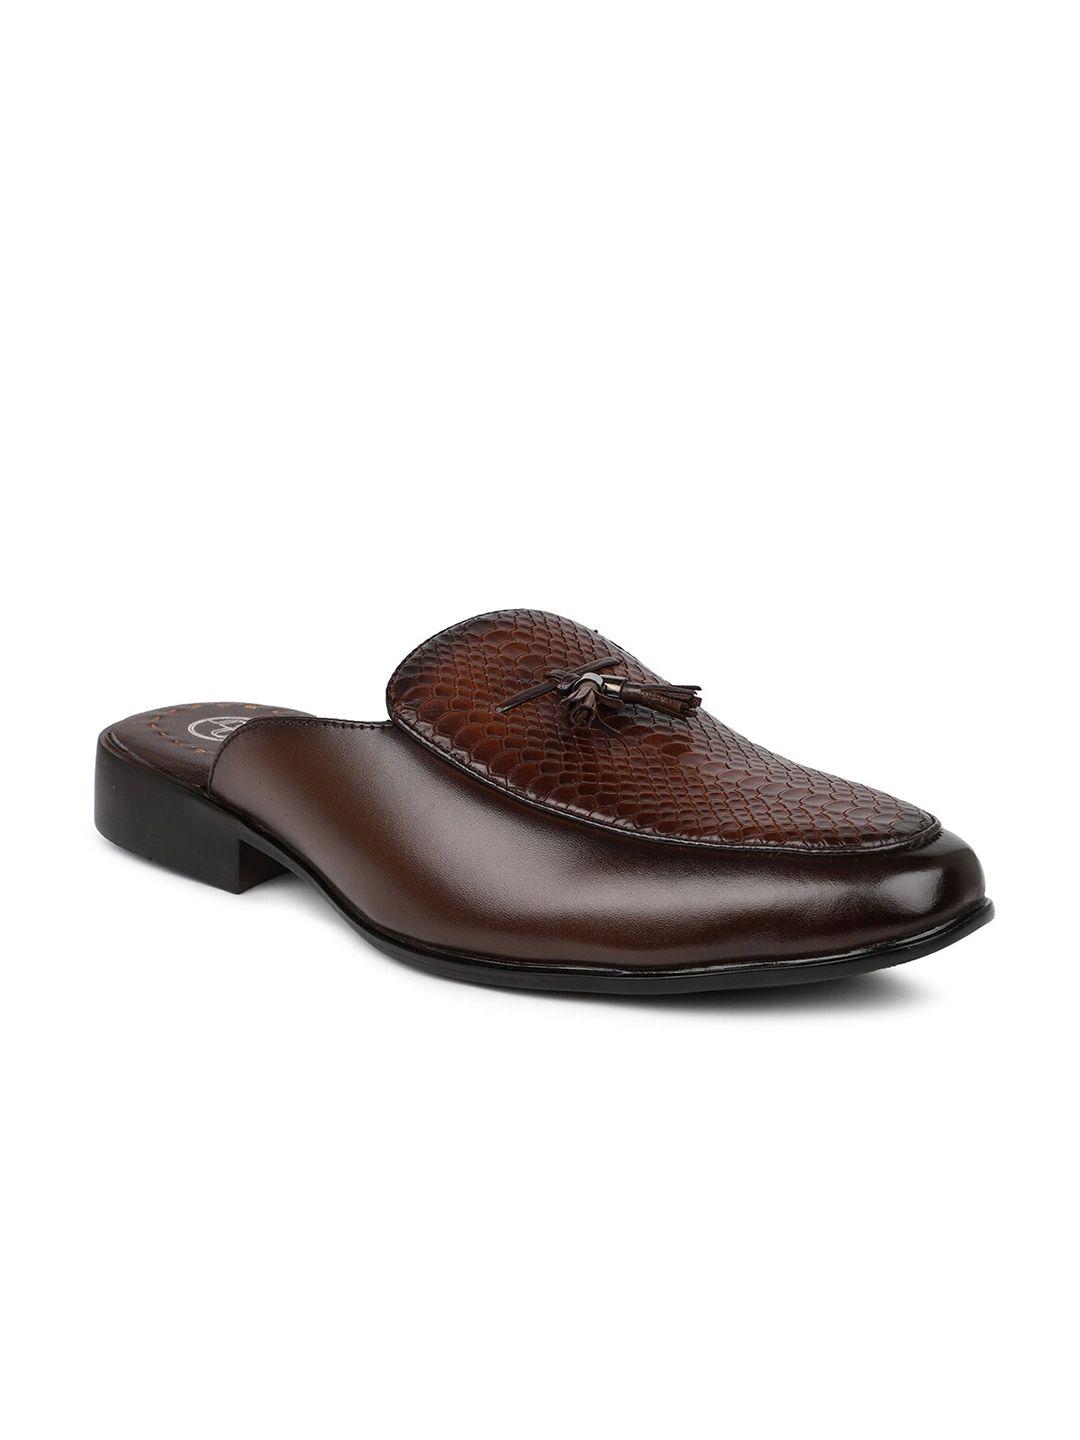 privo men leather shoe-style sandals